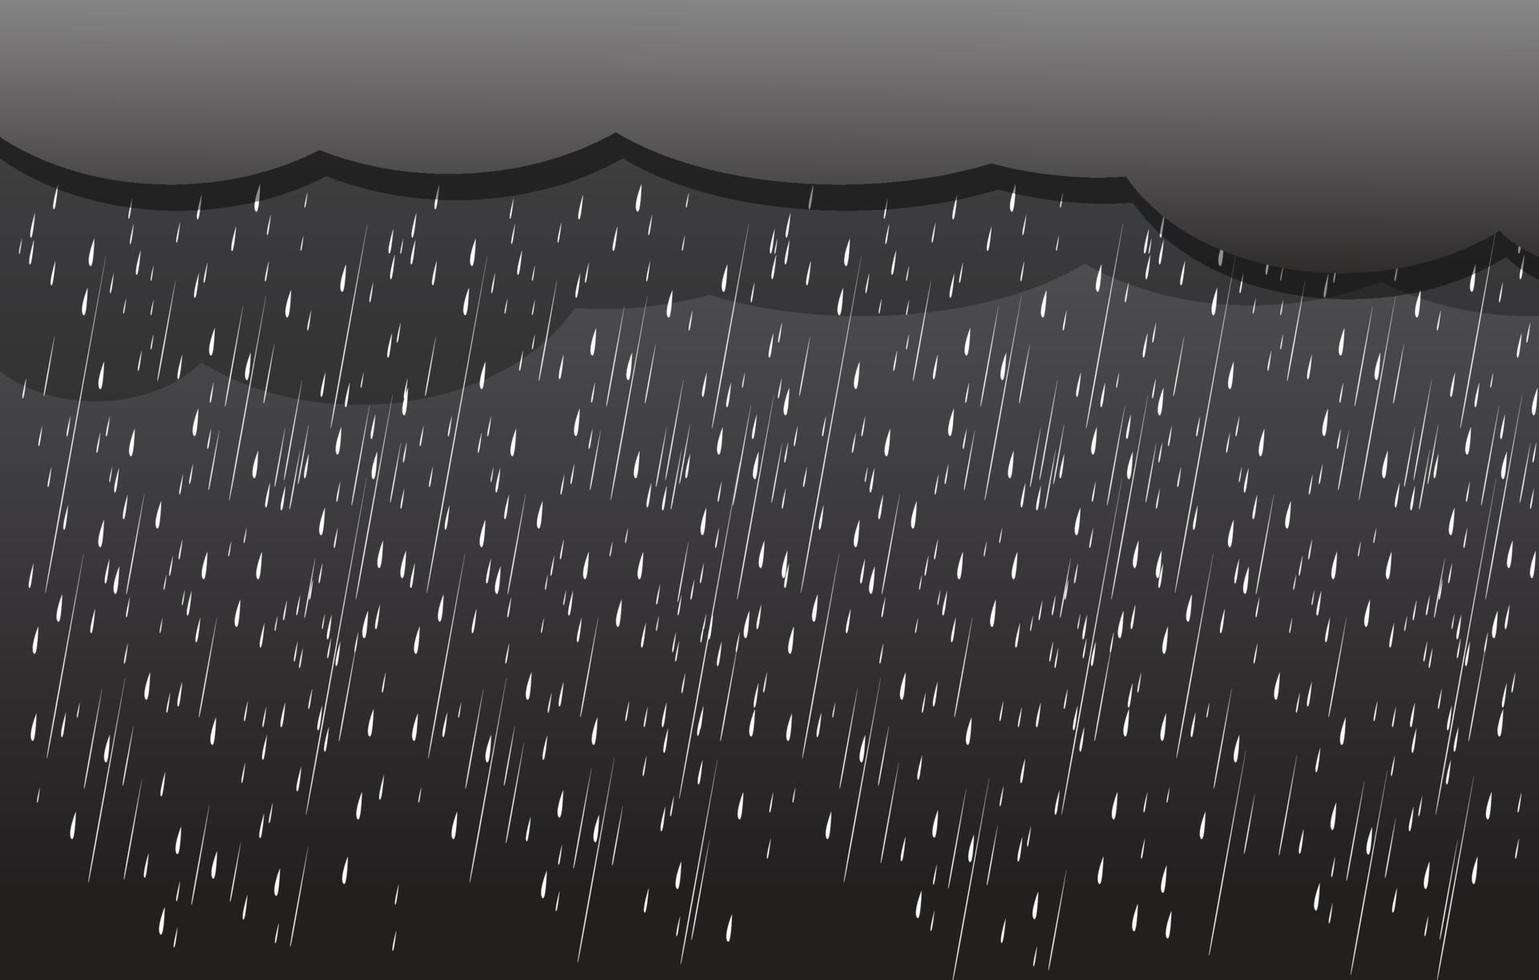 Heavy rain in dark sky, vector background